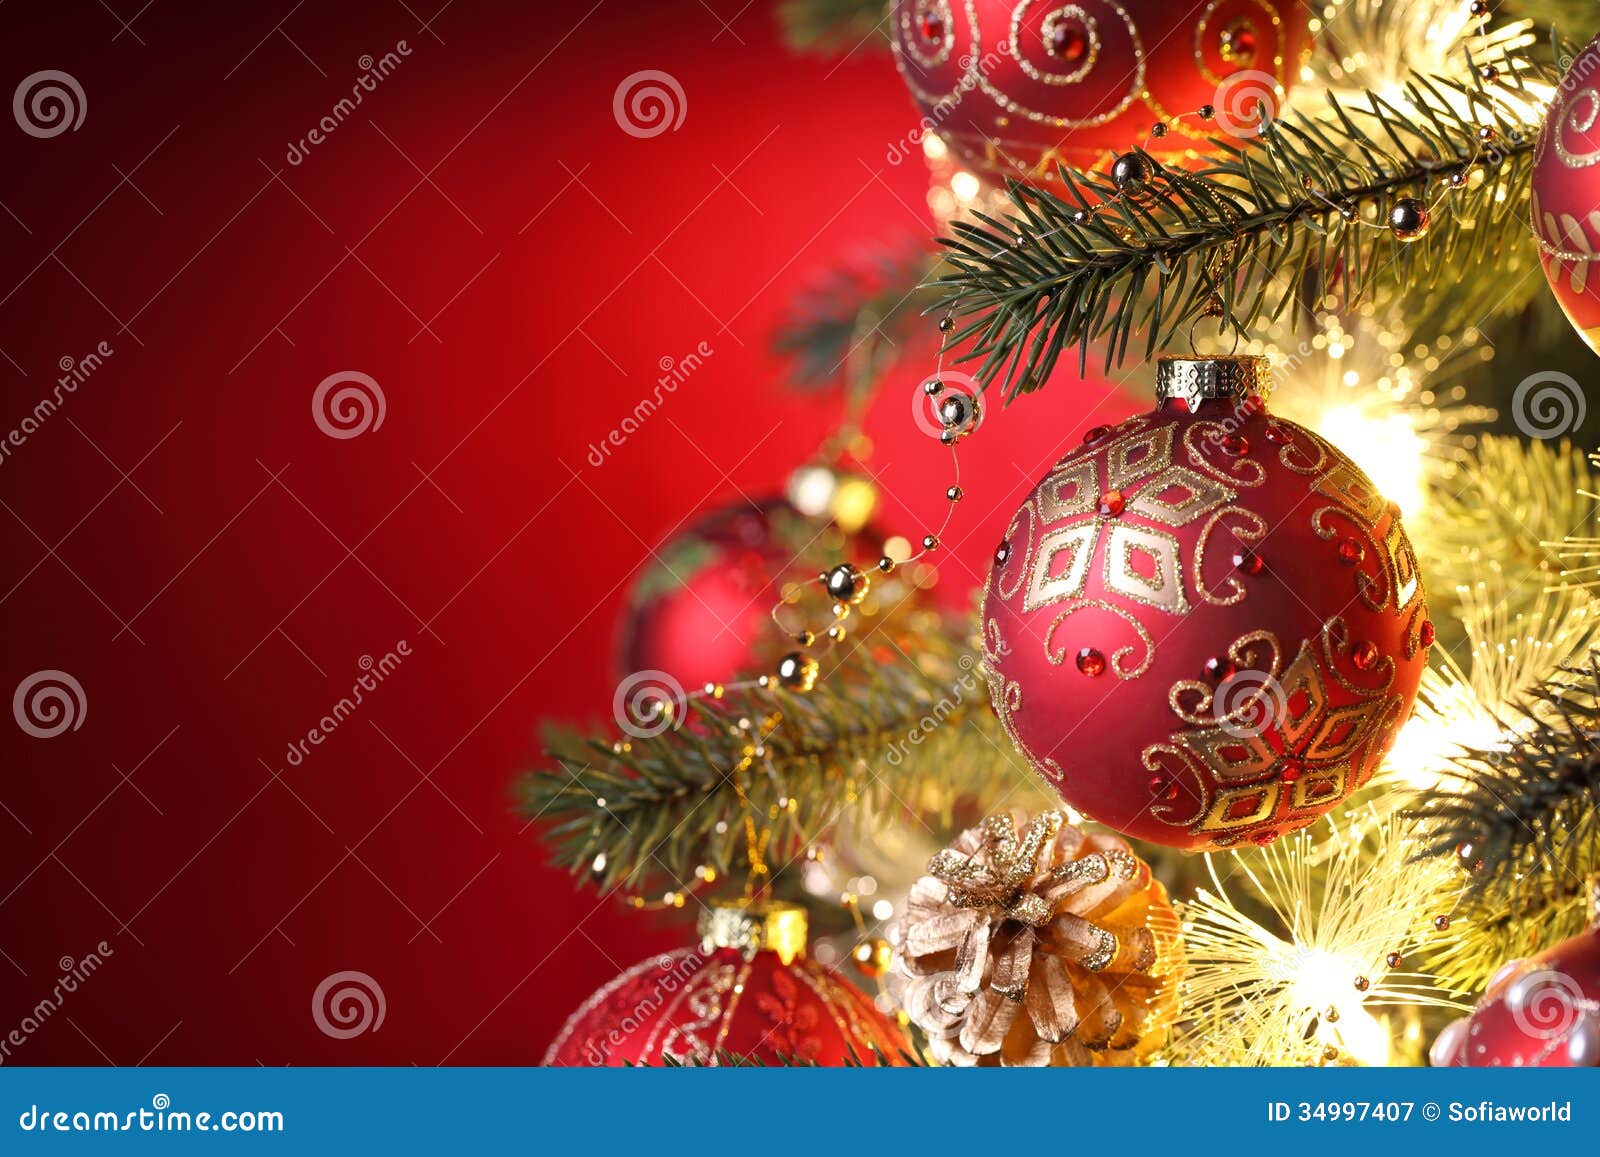  Christmas  tree decorations  stock image Image of christmas  